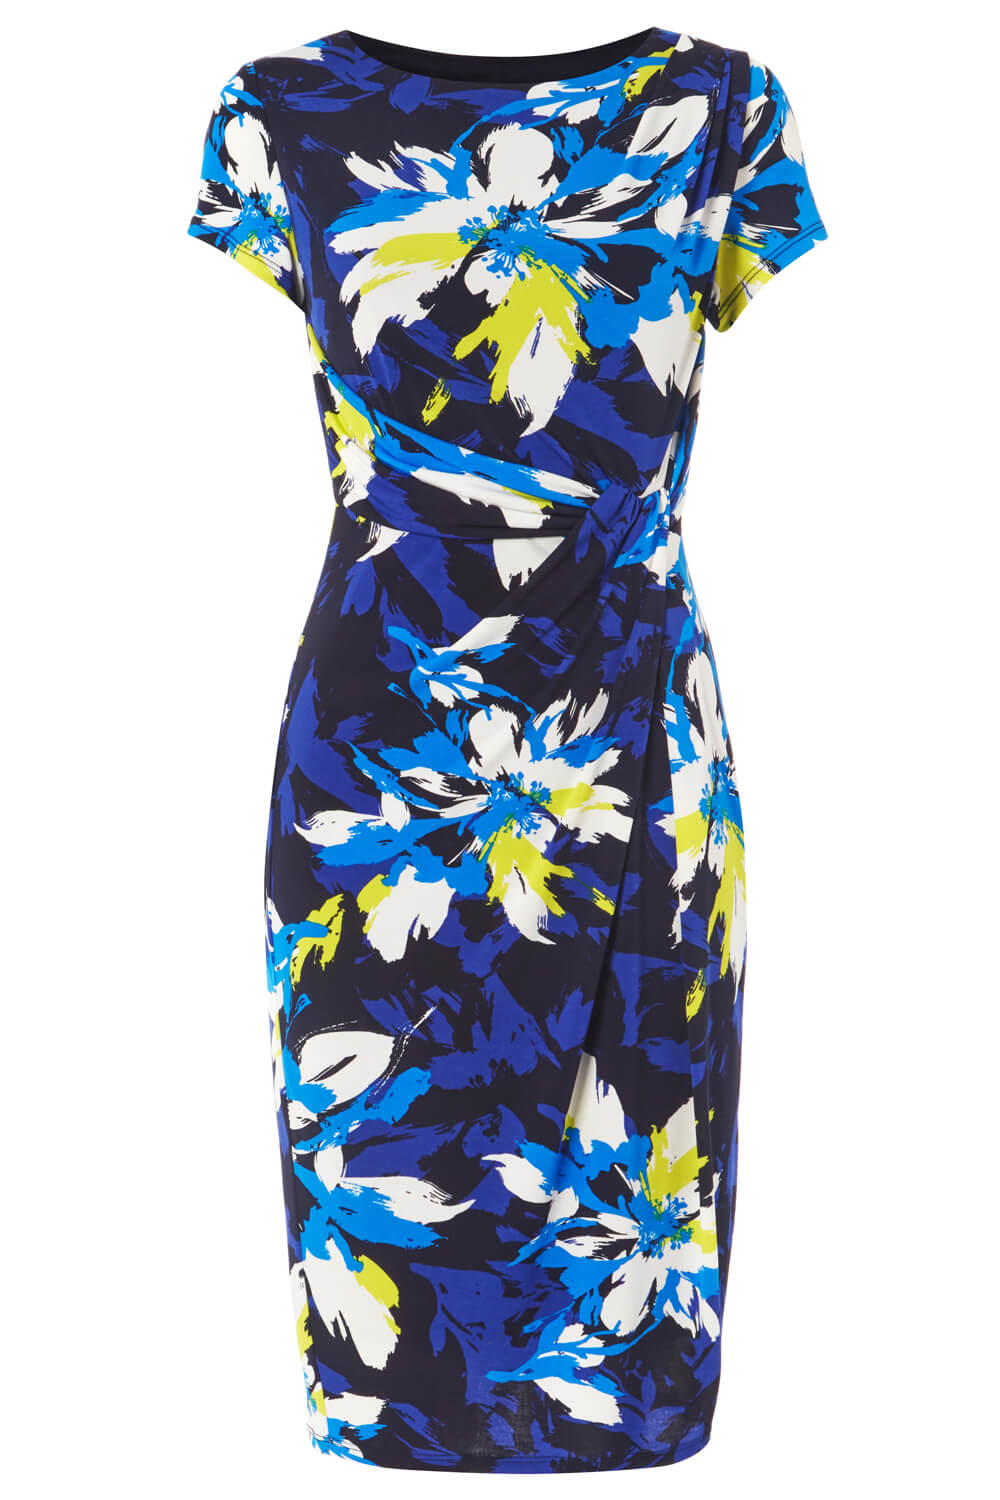 Floral Print Side Twist Dress in Royal Blue - Roman Originals UK